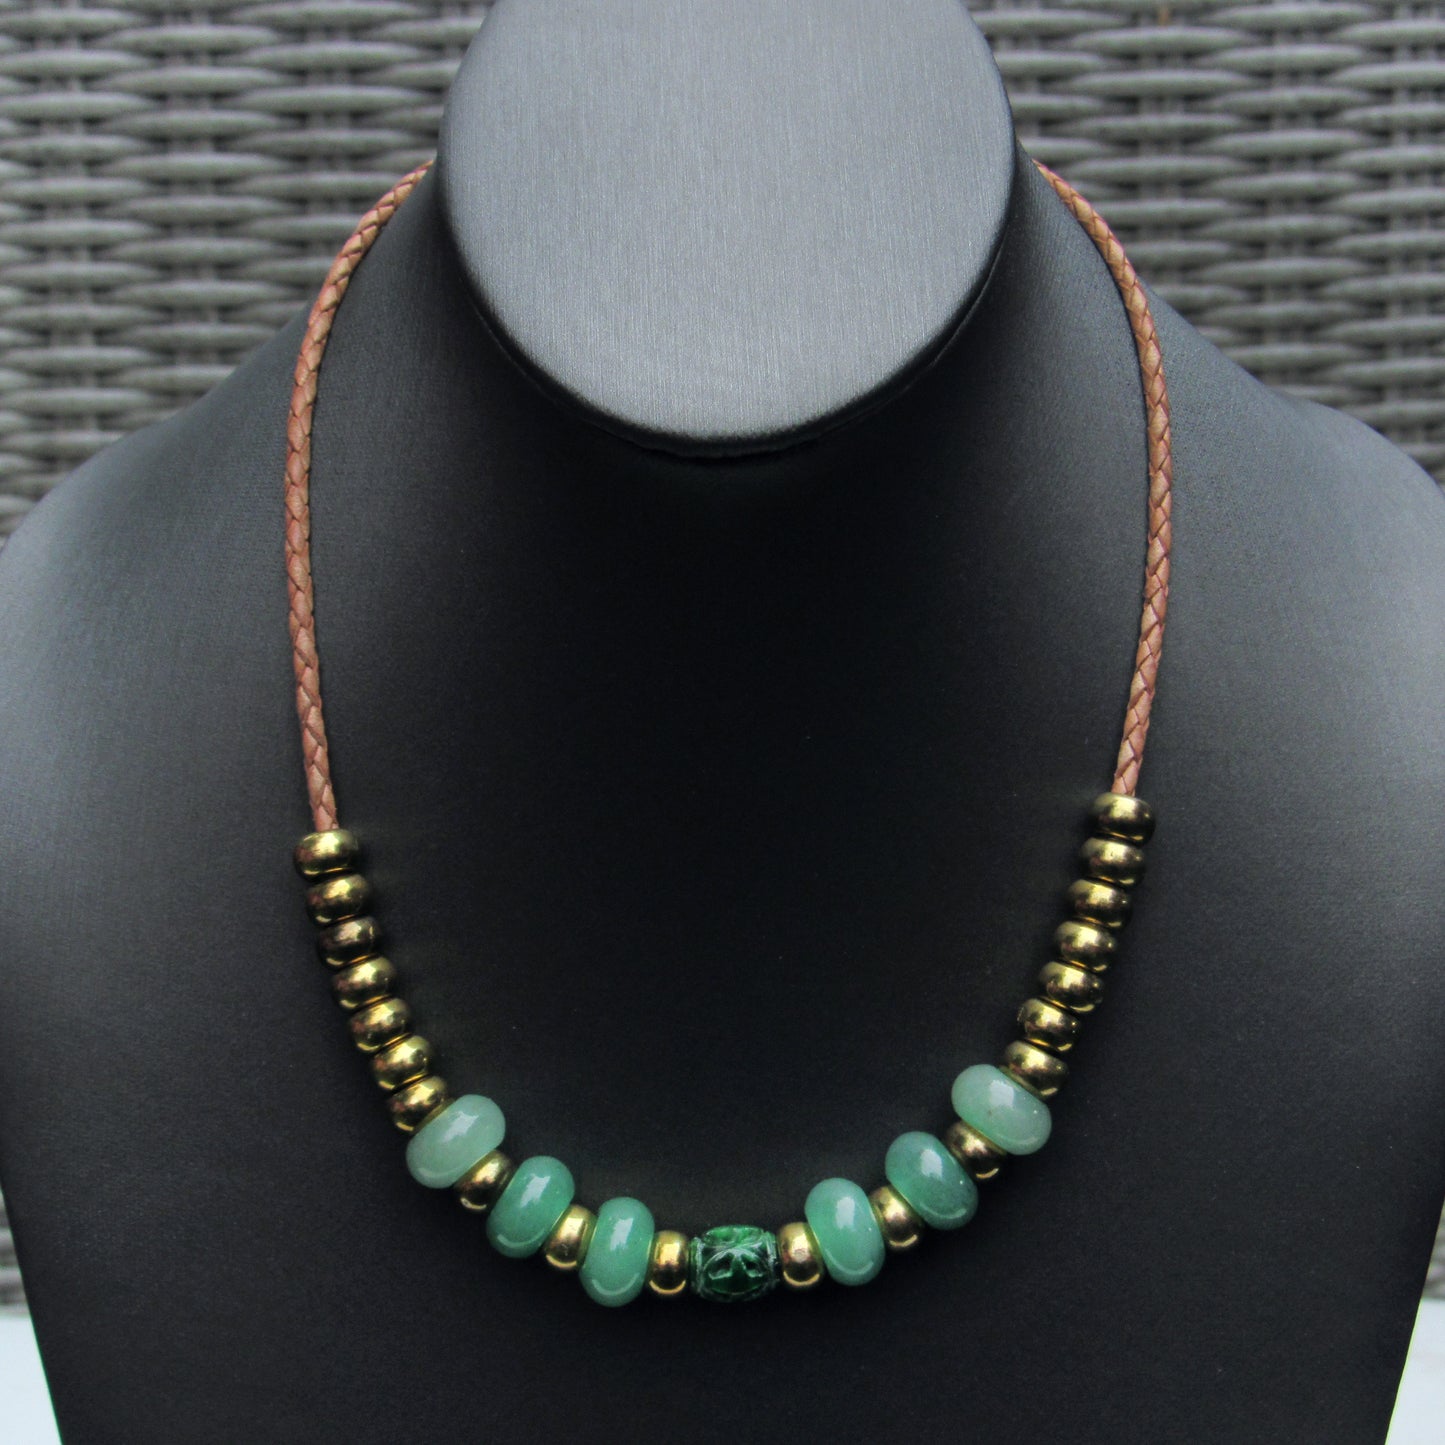 Jade gemstone, Aventurine, and Brass on genuine leather Necklace